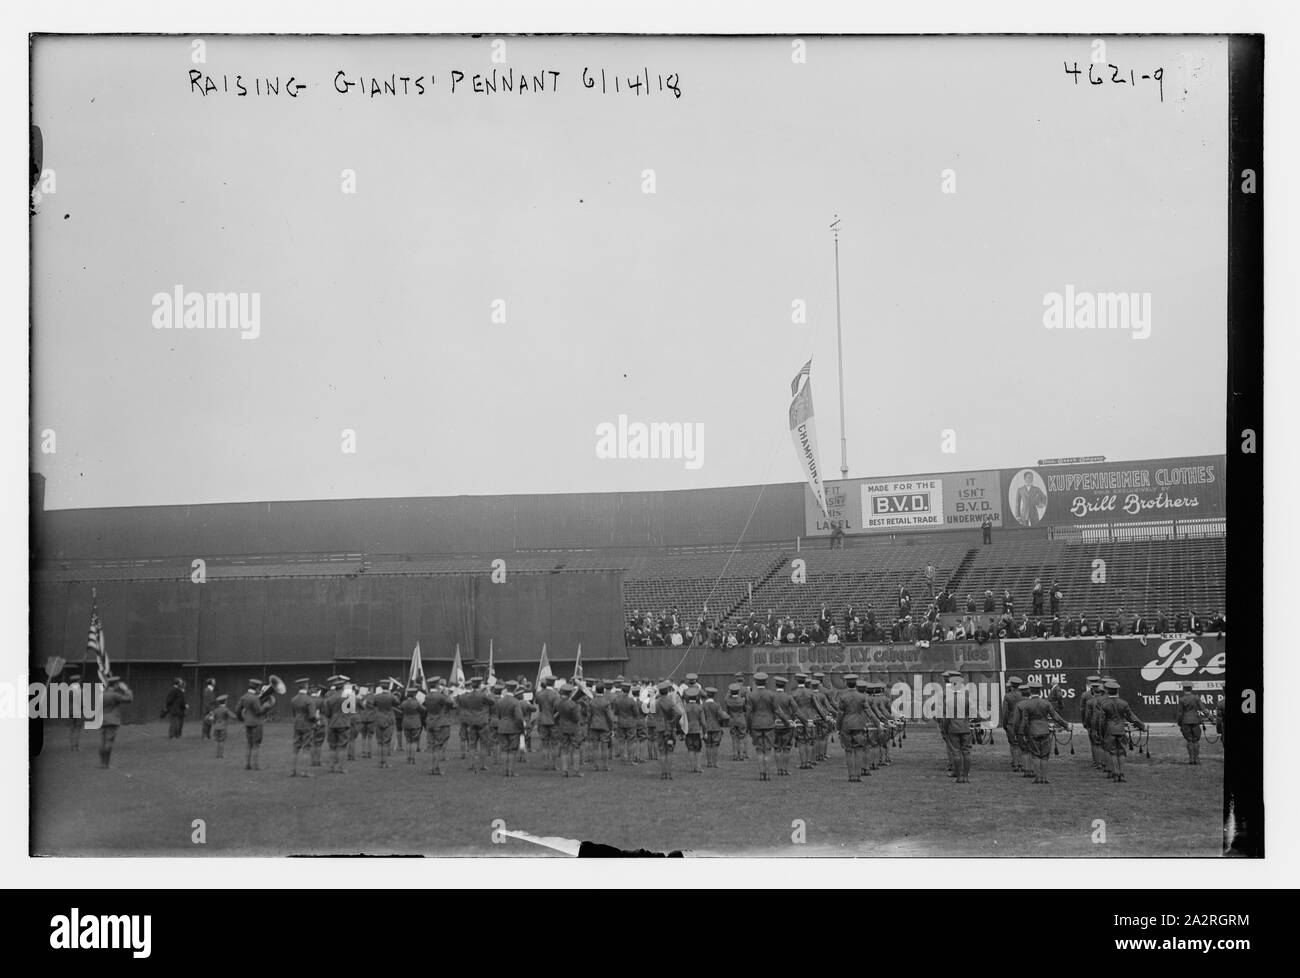 Raising Giants pennant, 6/14/18 Stock Photo